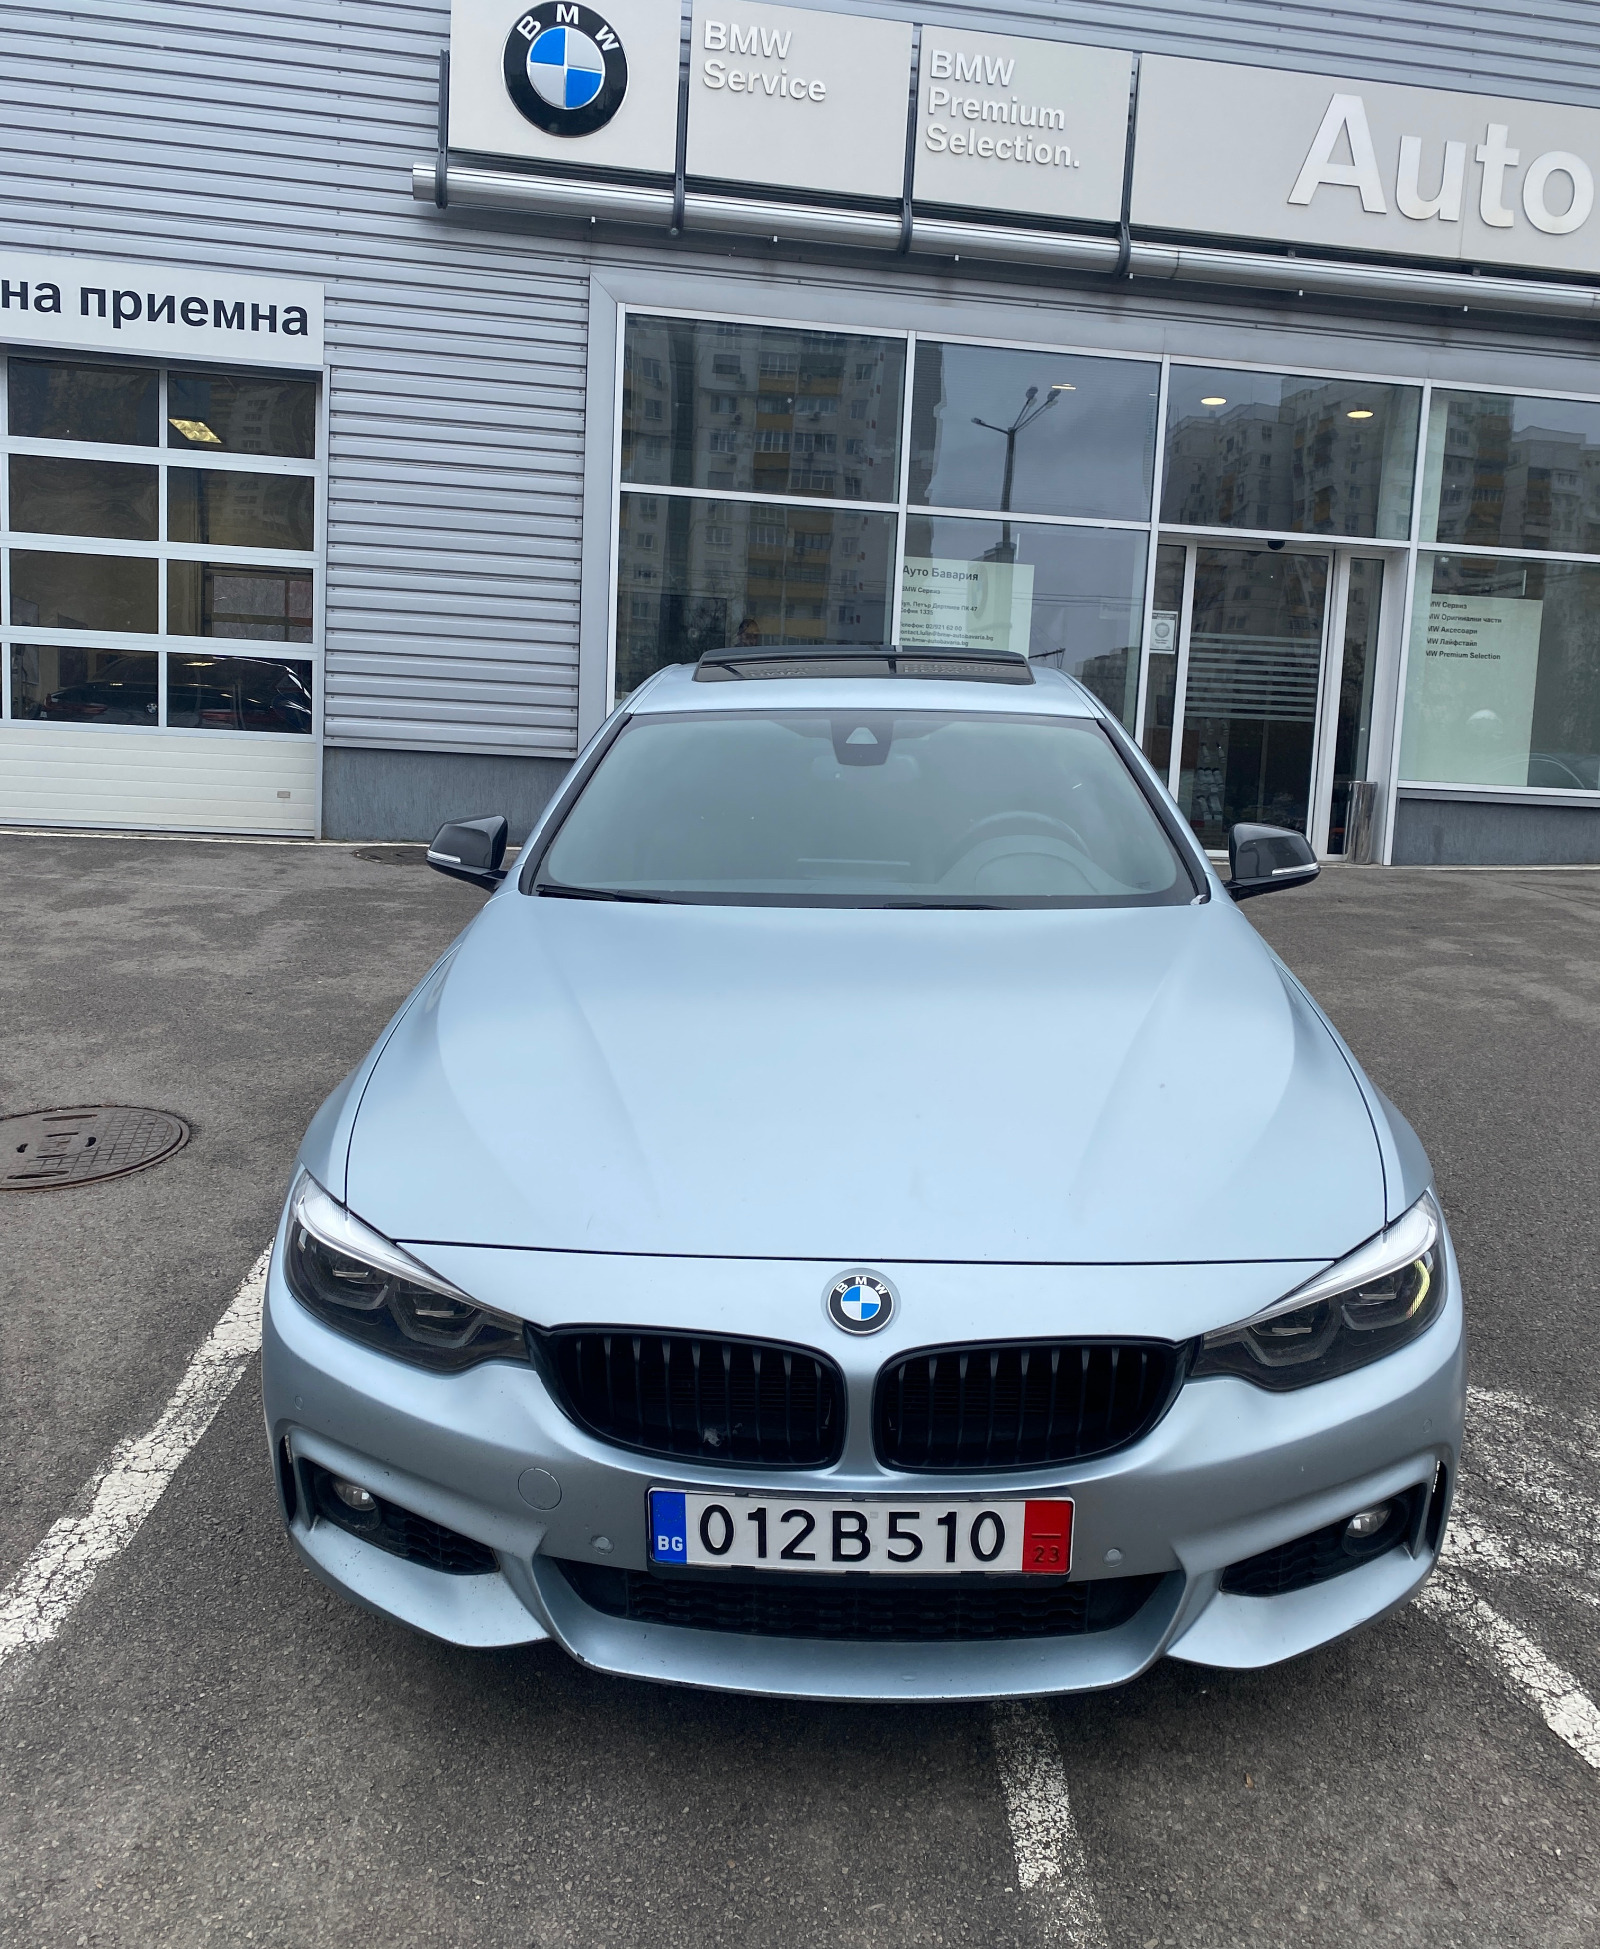 BMW 420 dX/LCi-Mpaket/frozen metallic  - изображение 1